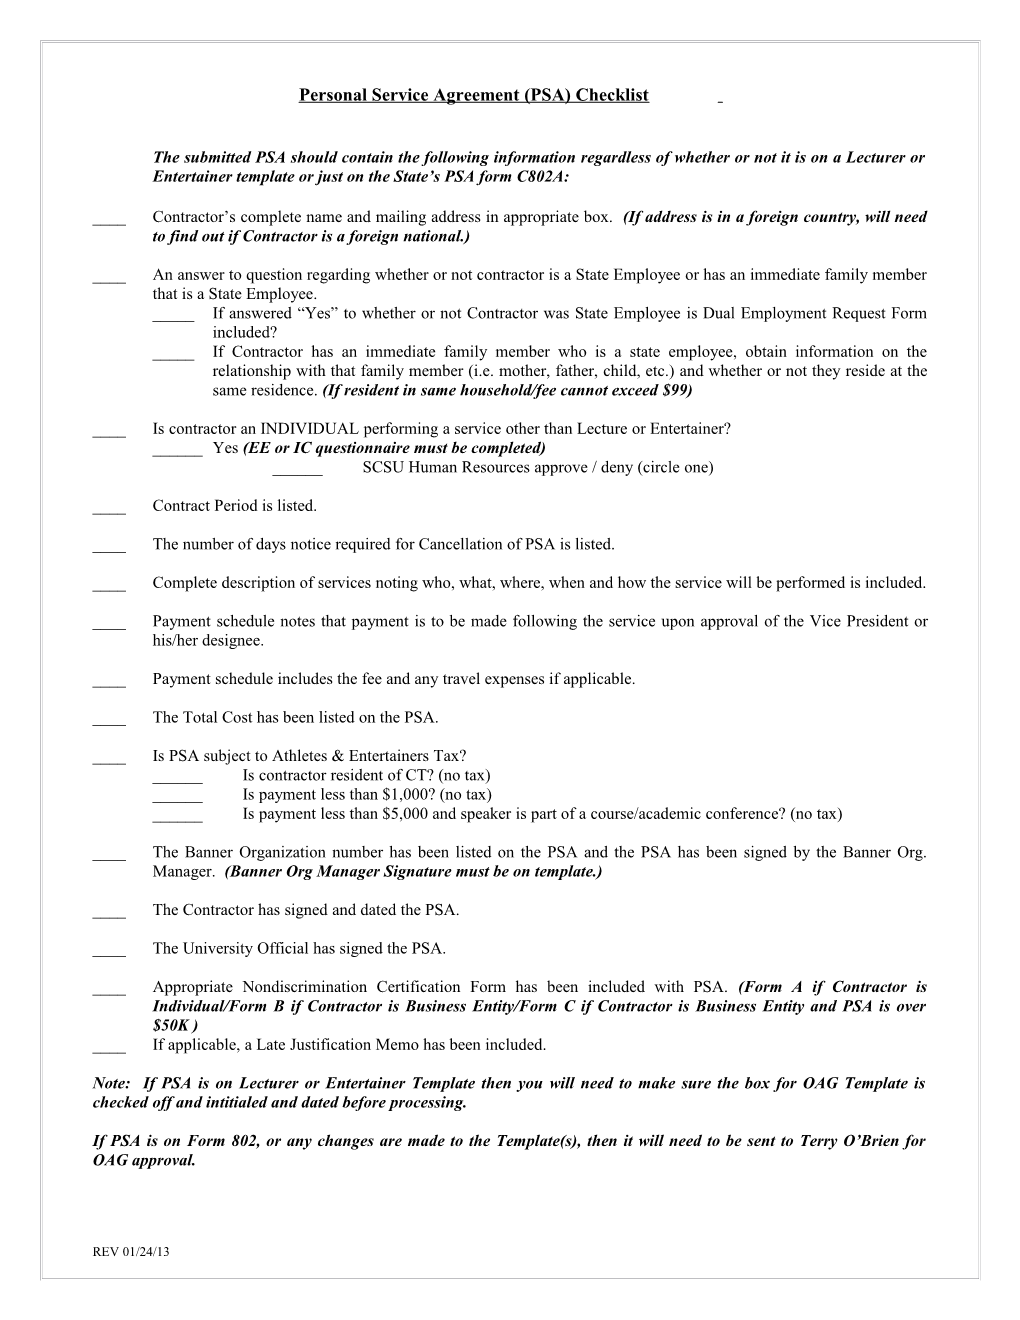 Personal Service Agreement (PSA) Checklist